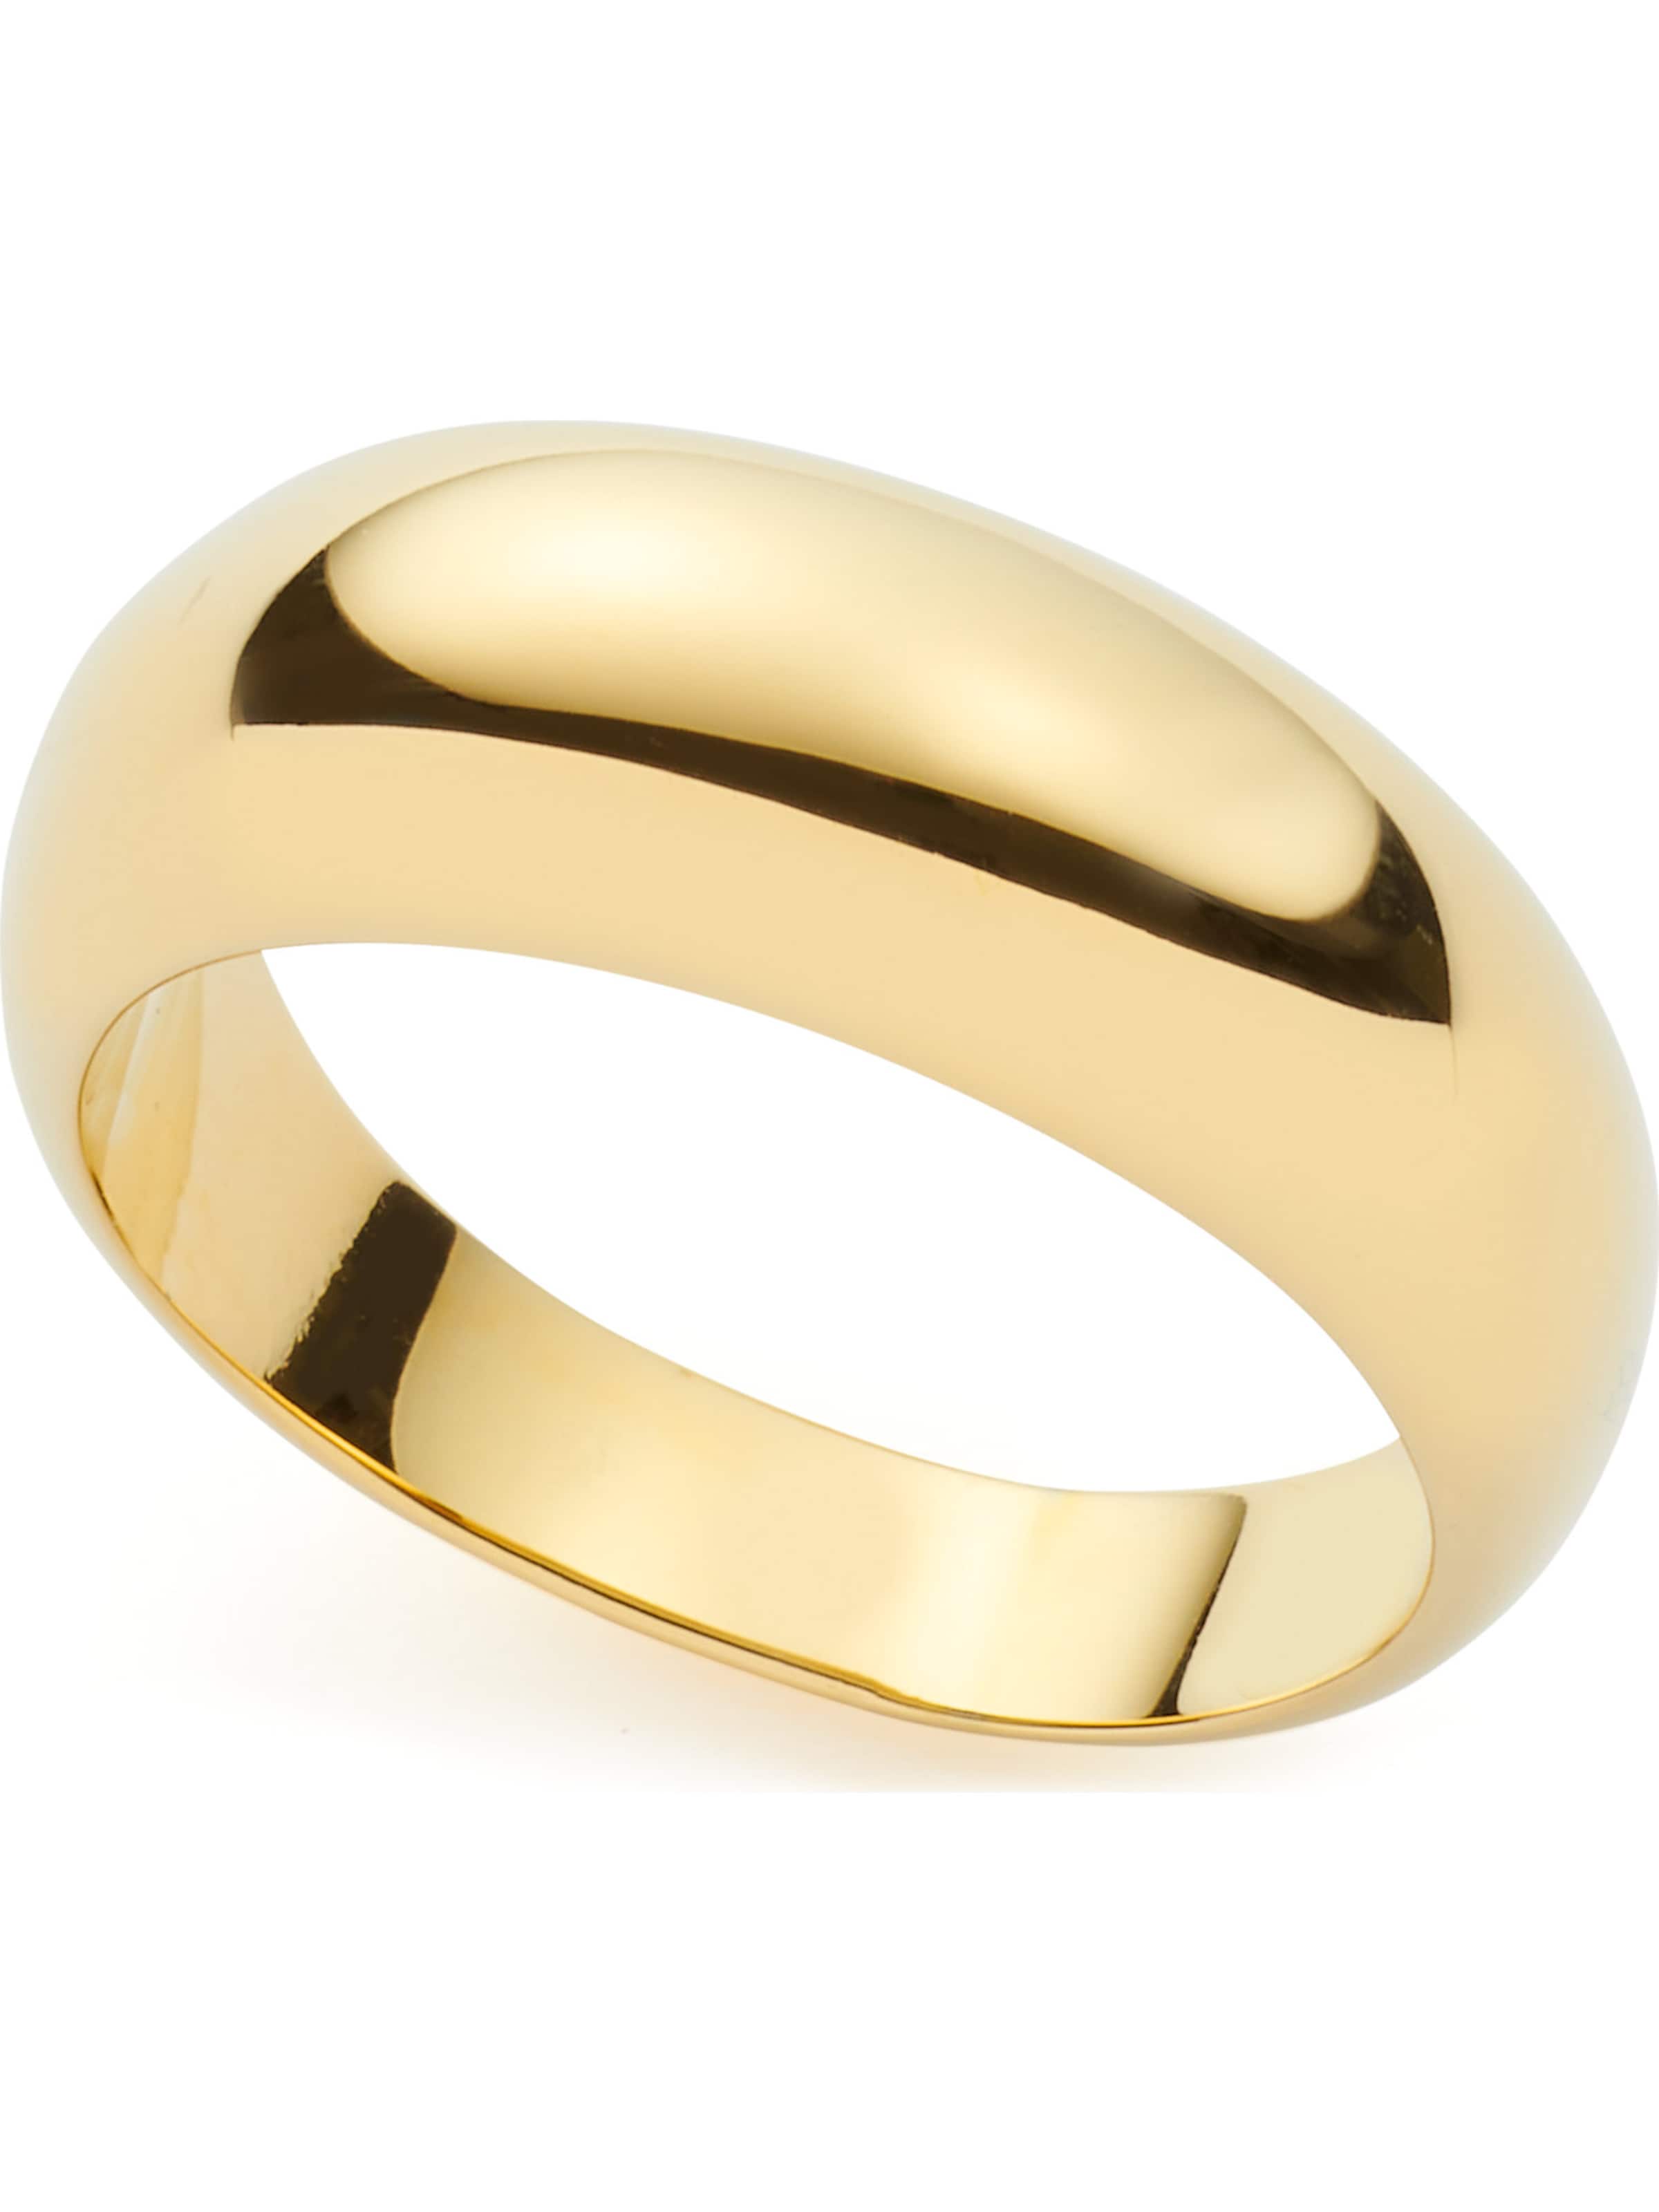 Frauen Schmuck LEONARDO Ring in Gold - ZR15701